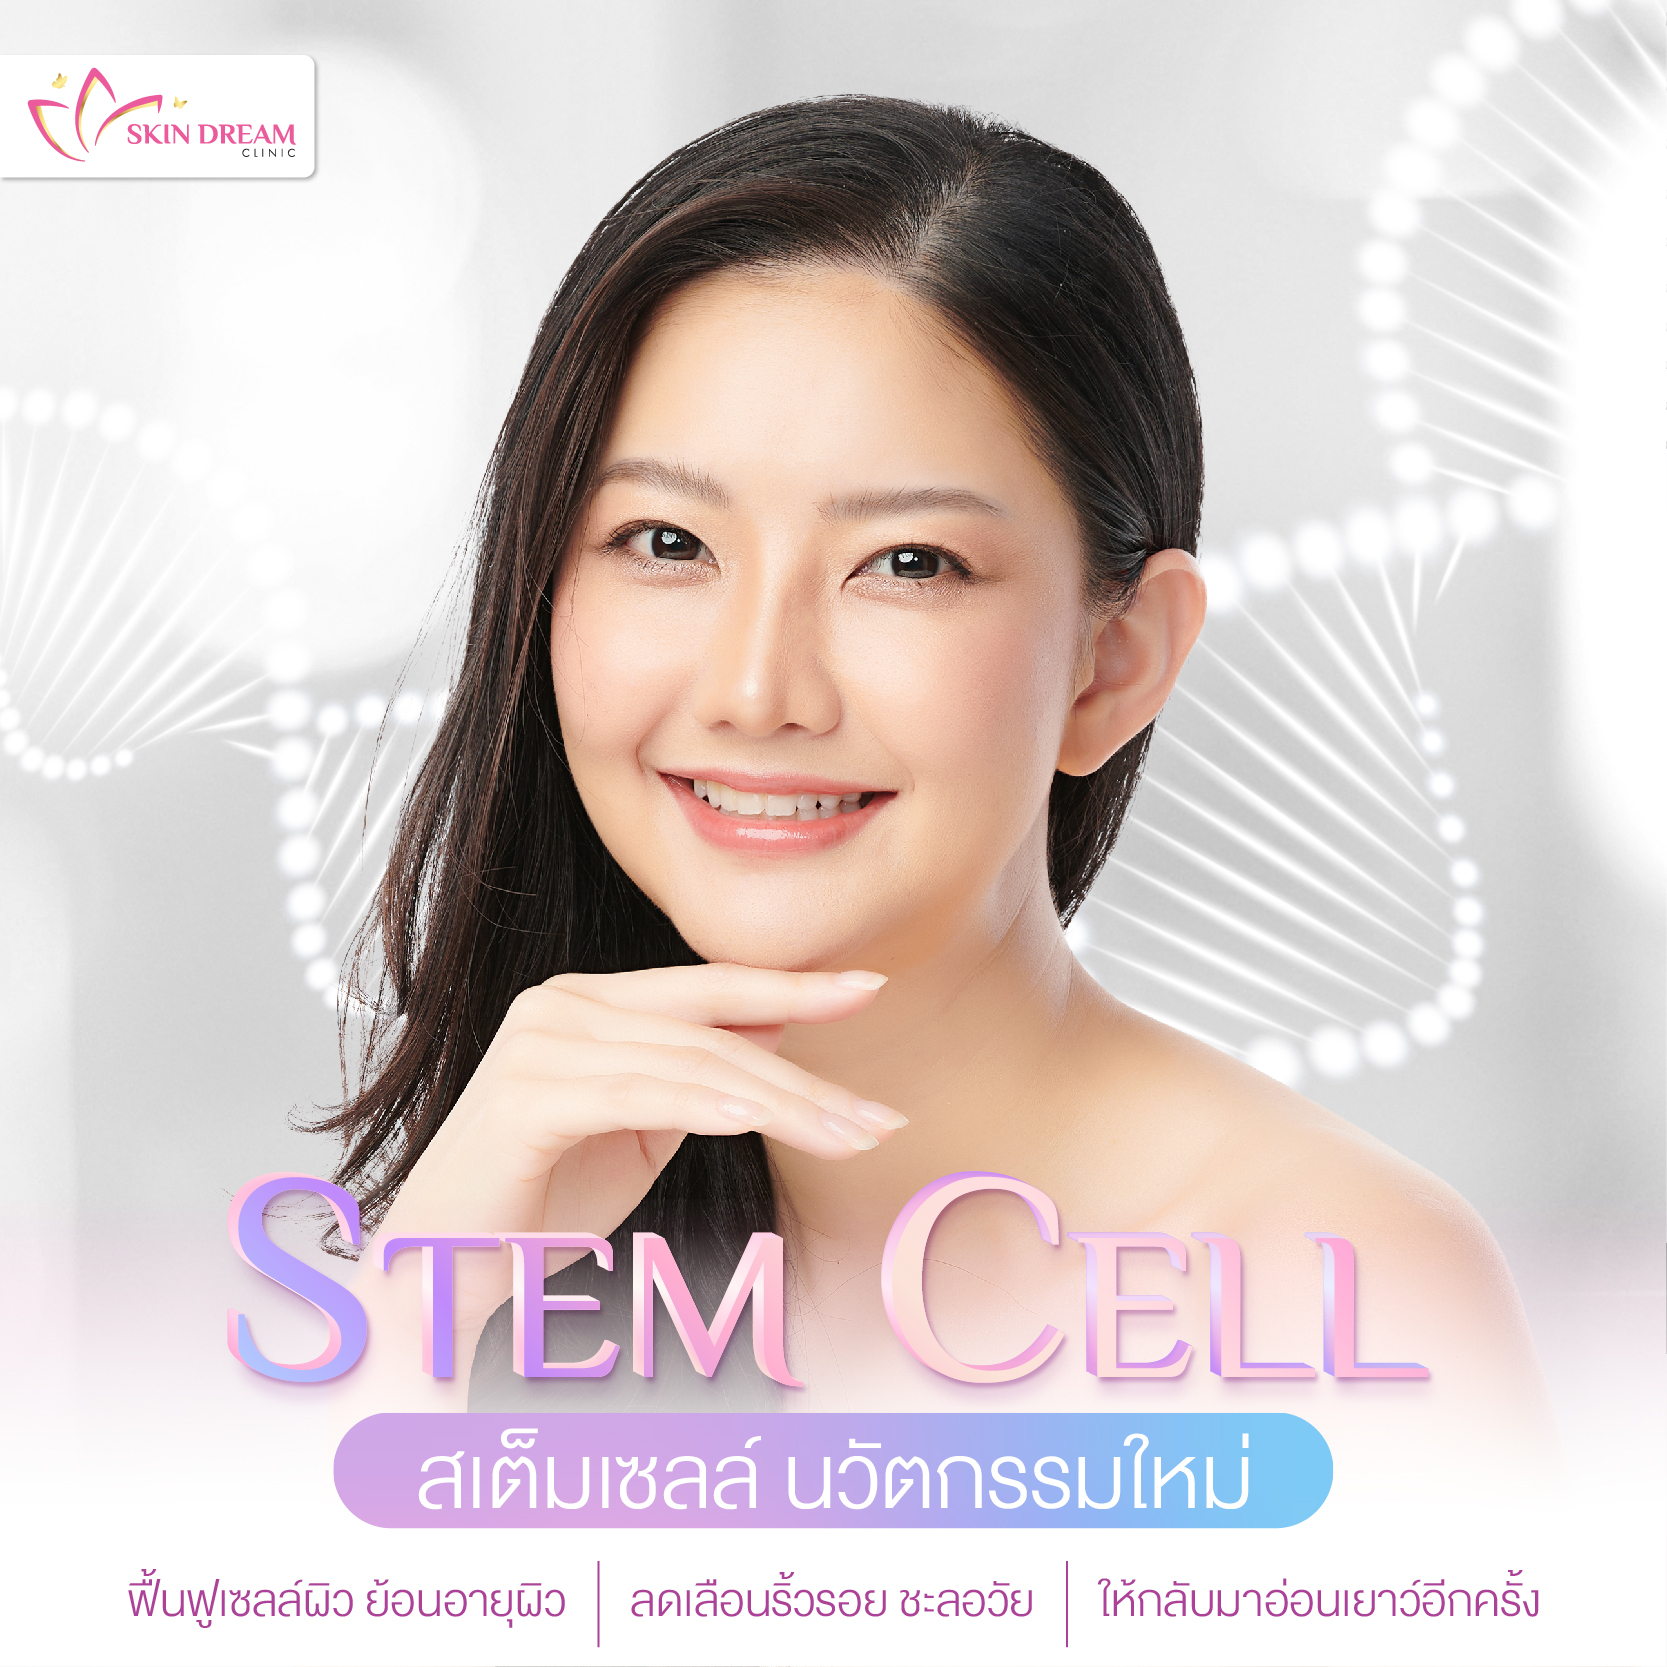 Stem cell microneeding